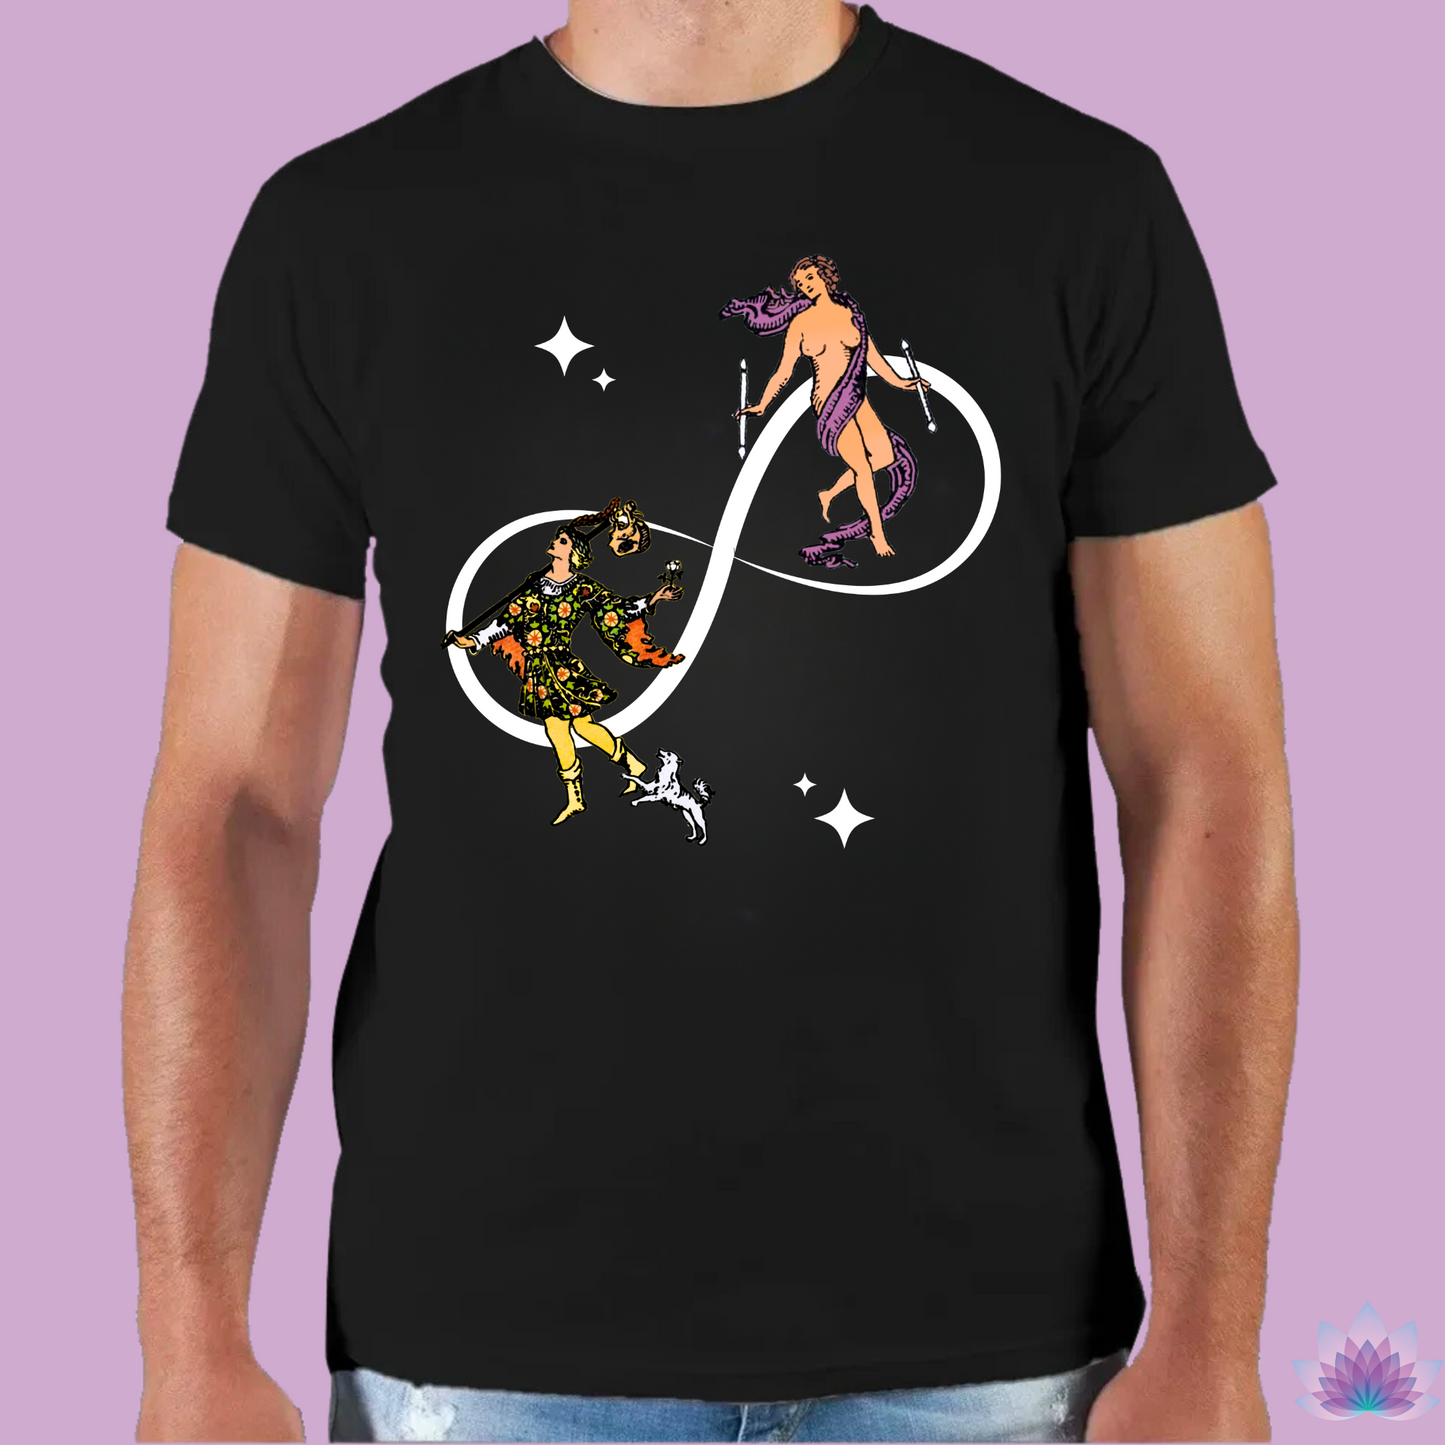 Tarot Fusion T-Shirt • The Fool And The World Cards On Infinite Symbol Black Shirt • Mystical Tee For Men & Women • Tarot Enthusiast Gift • Apollo Tarot Shop